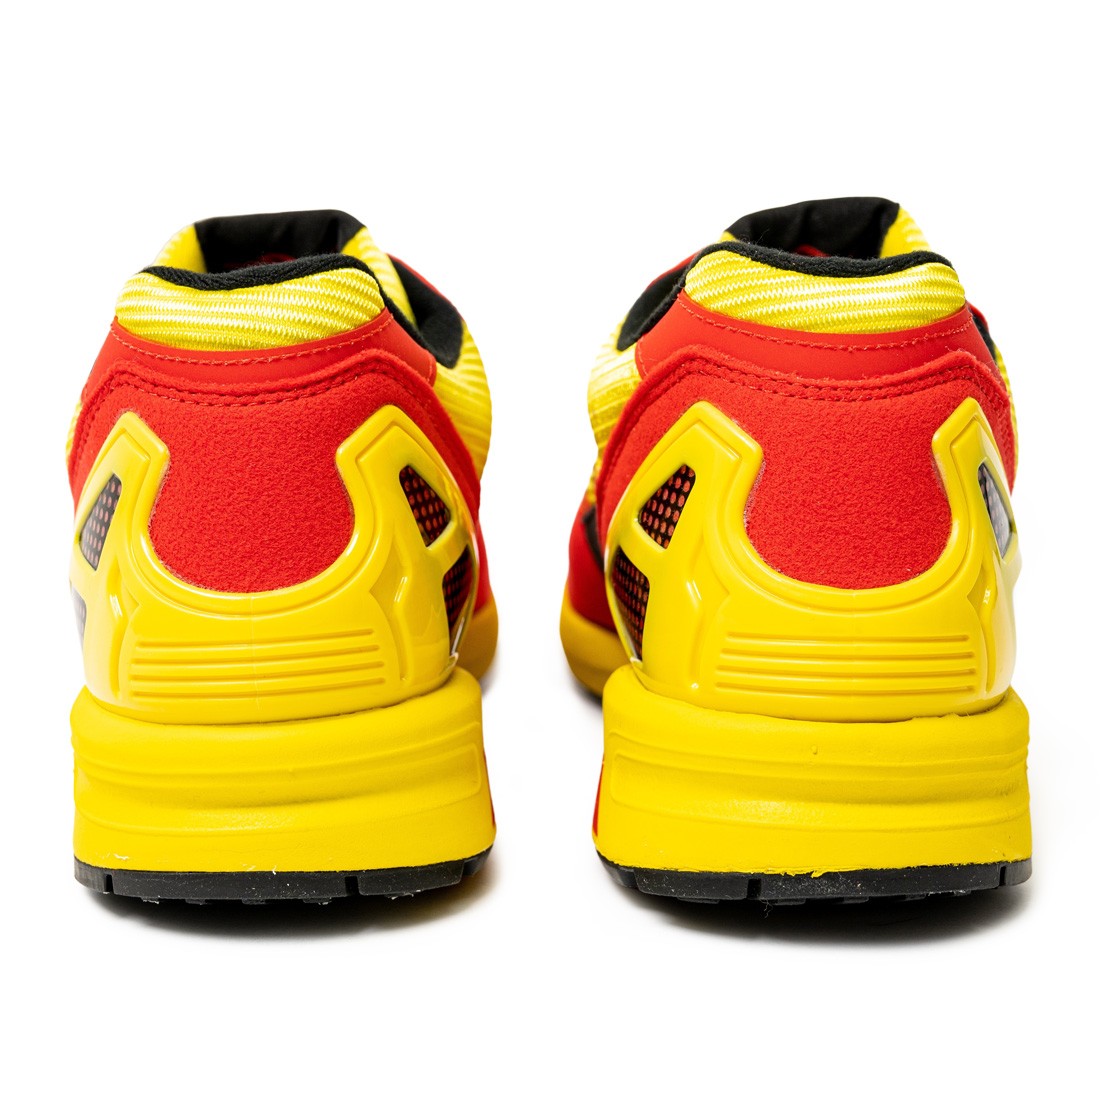 Adidas Men ZX 8000 (yellow / bright yellow / core black / red)